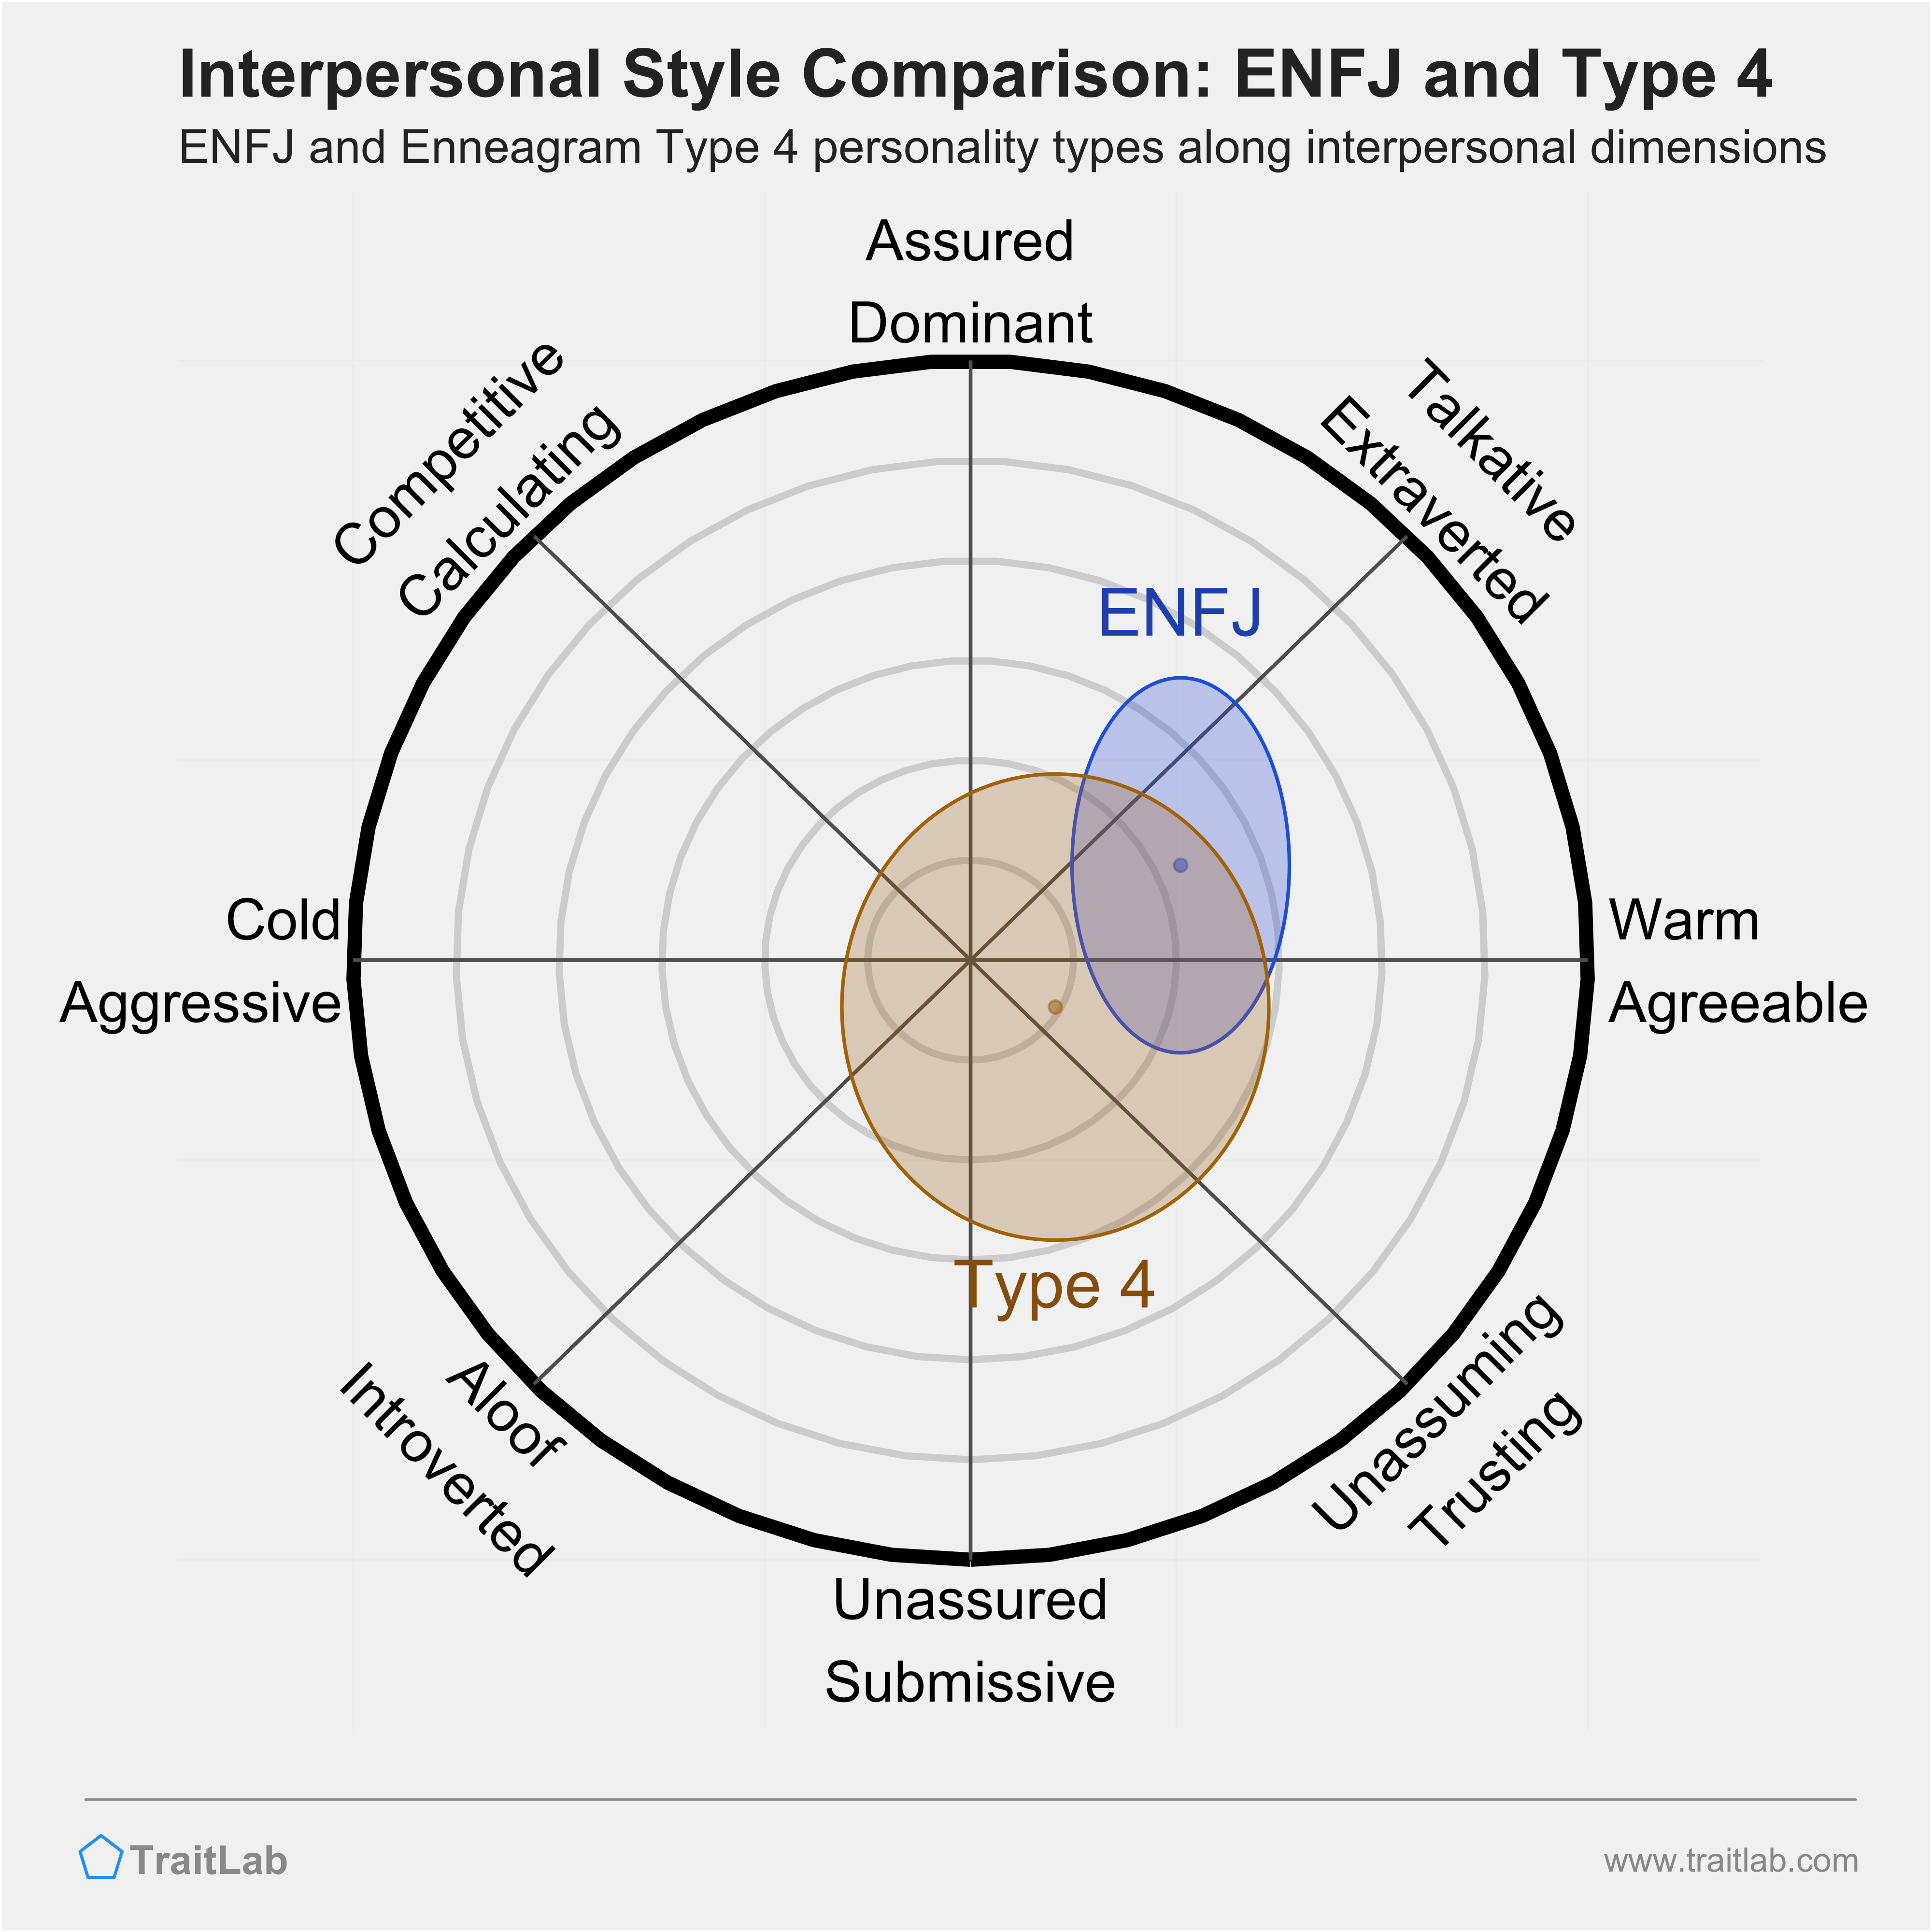 Enneagram ENFJ and Type 4 comparison across interpersonal dimensions